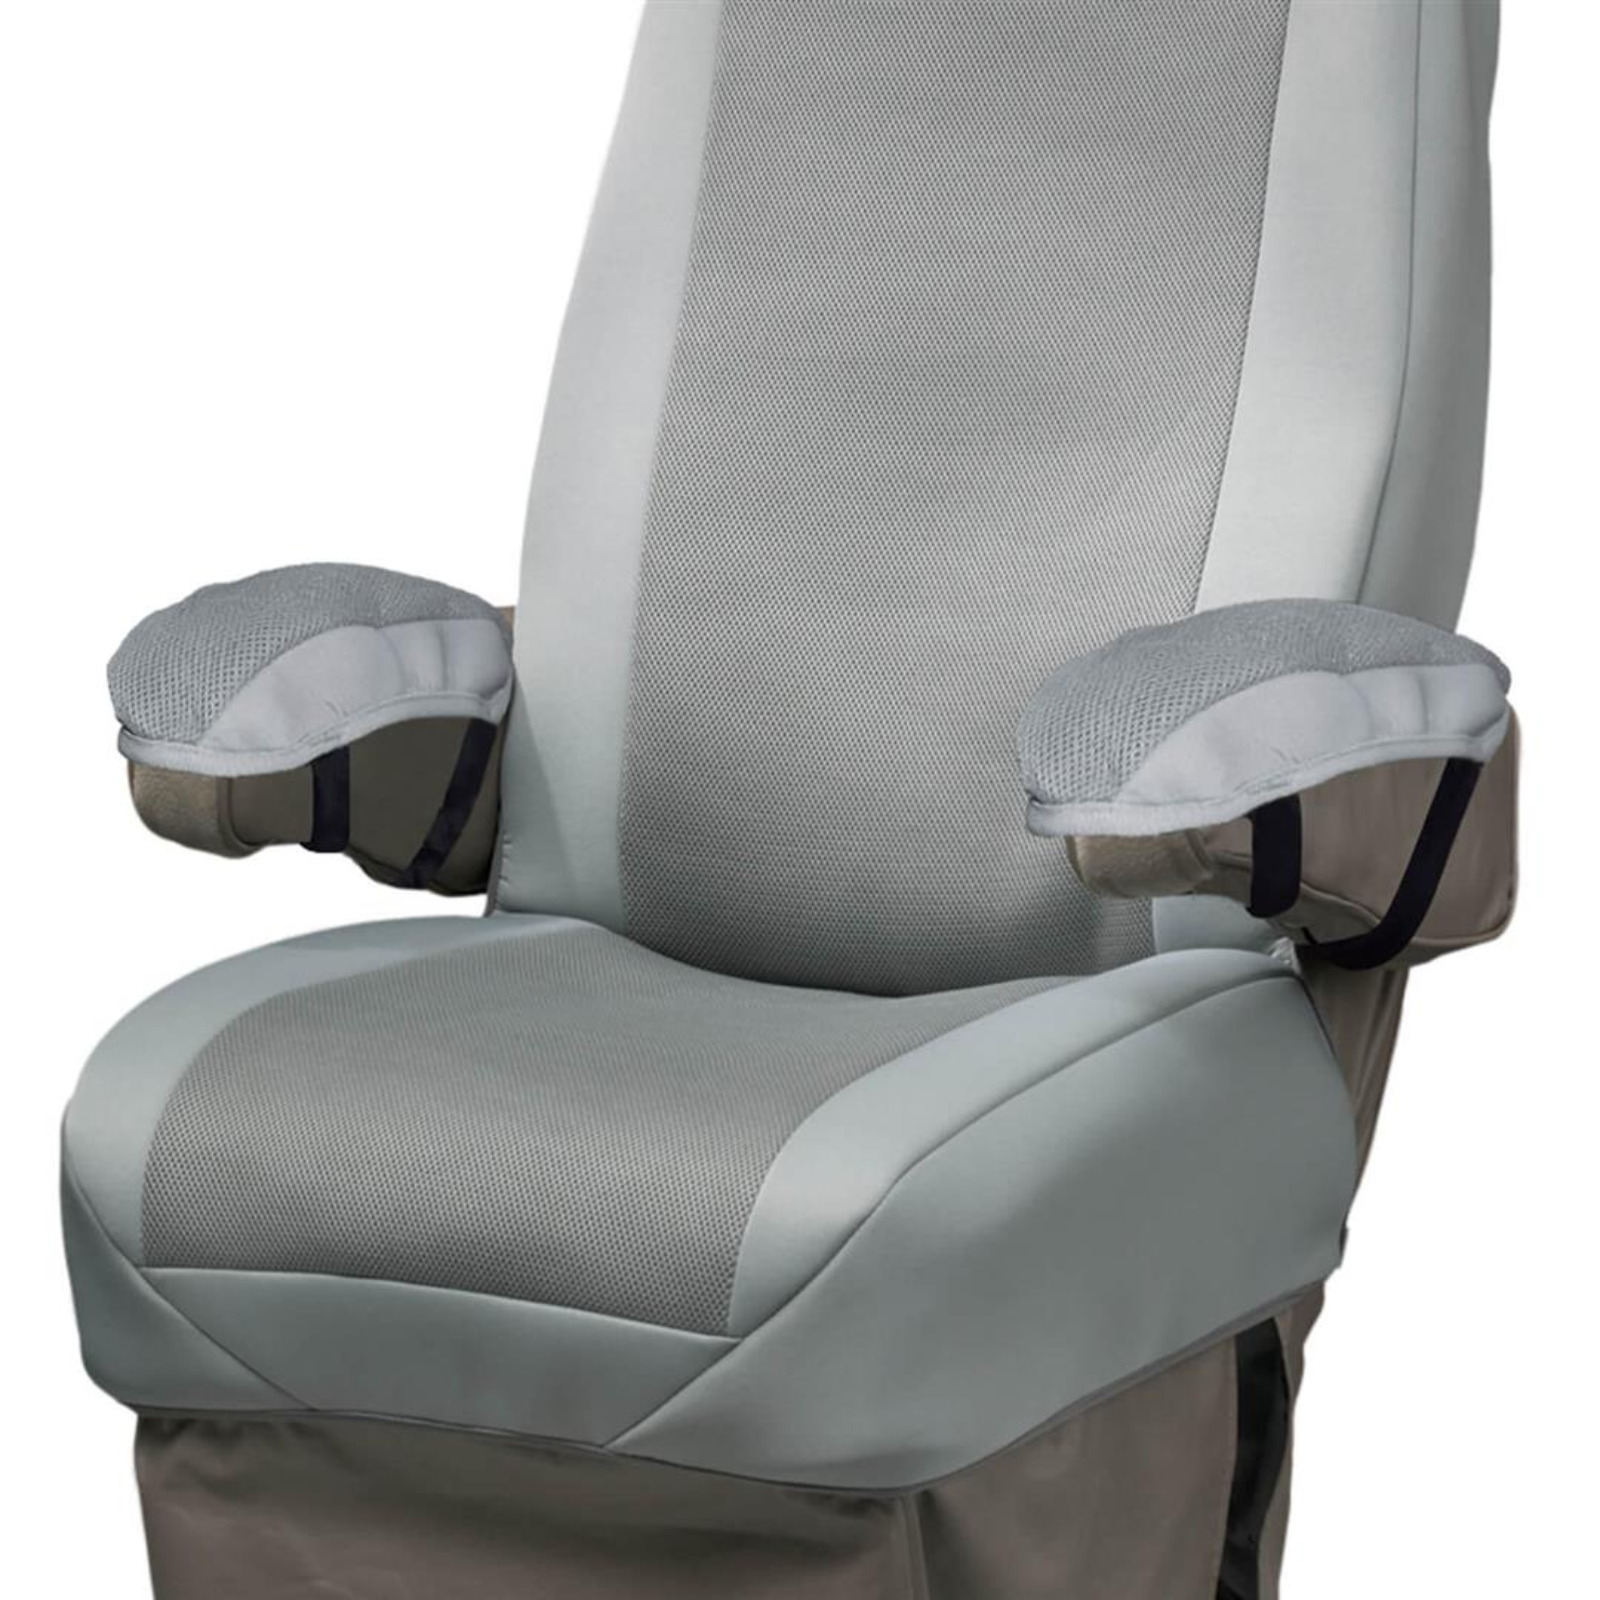 Covercraft SVR1001TN RV SeatGlove Universal Seat Cover Tan